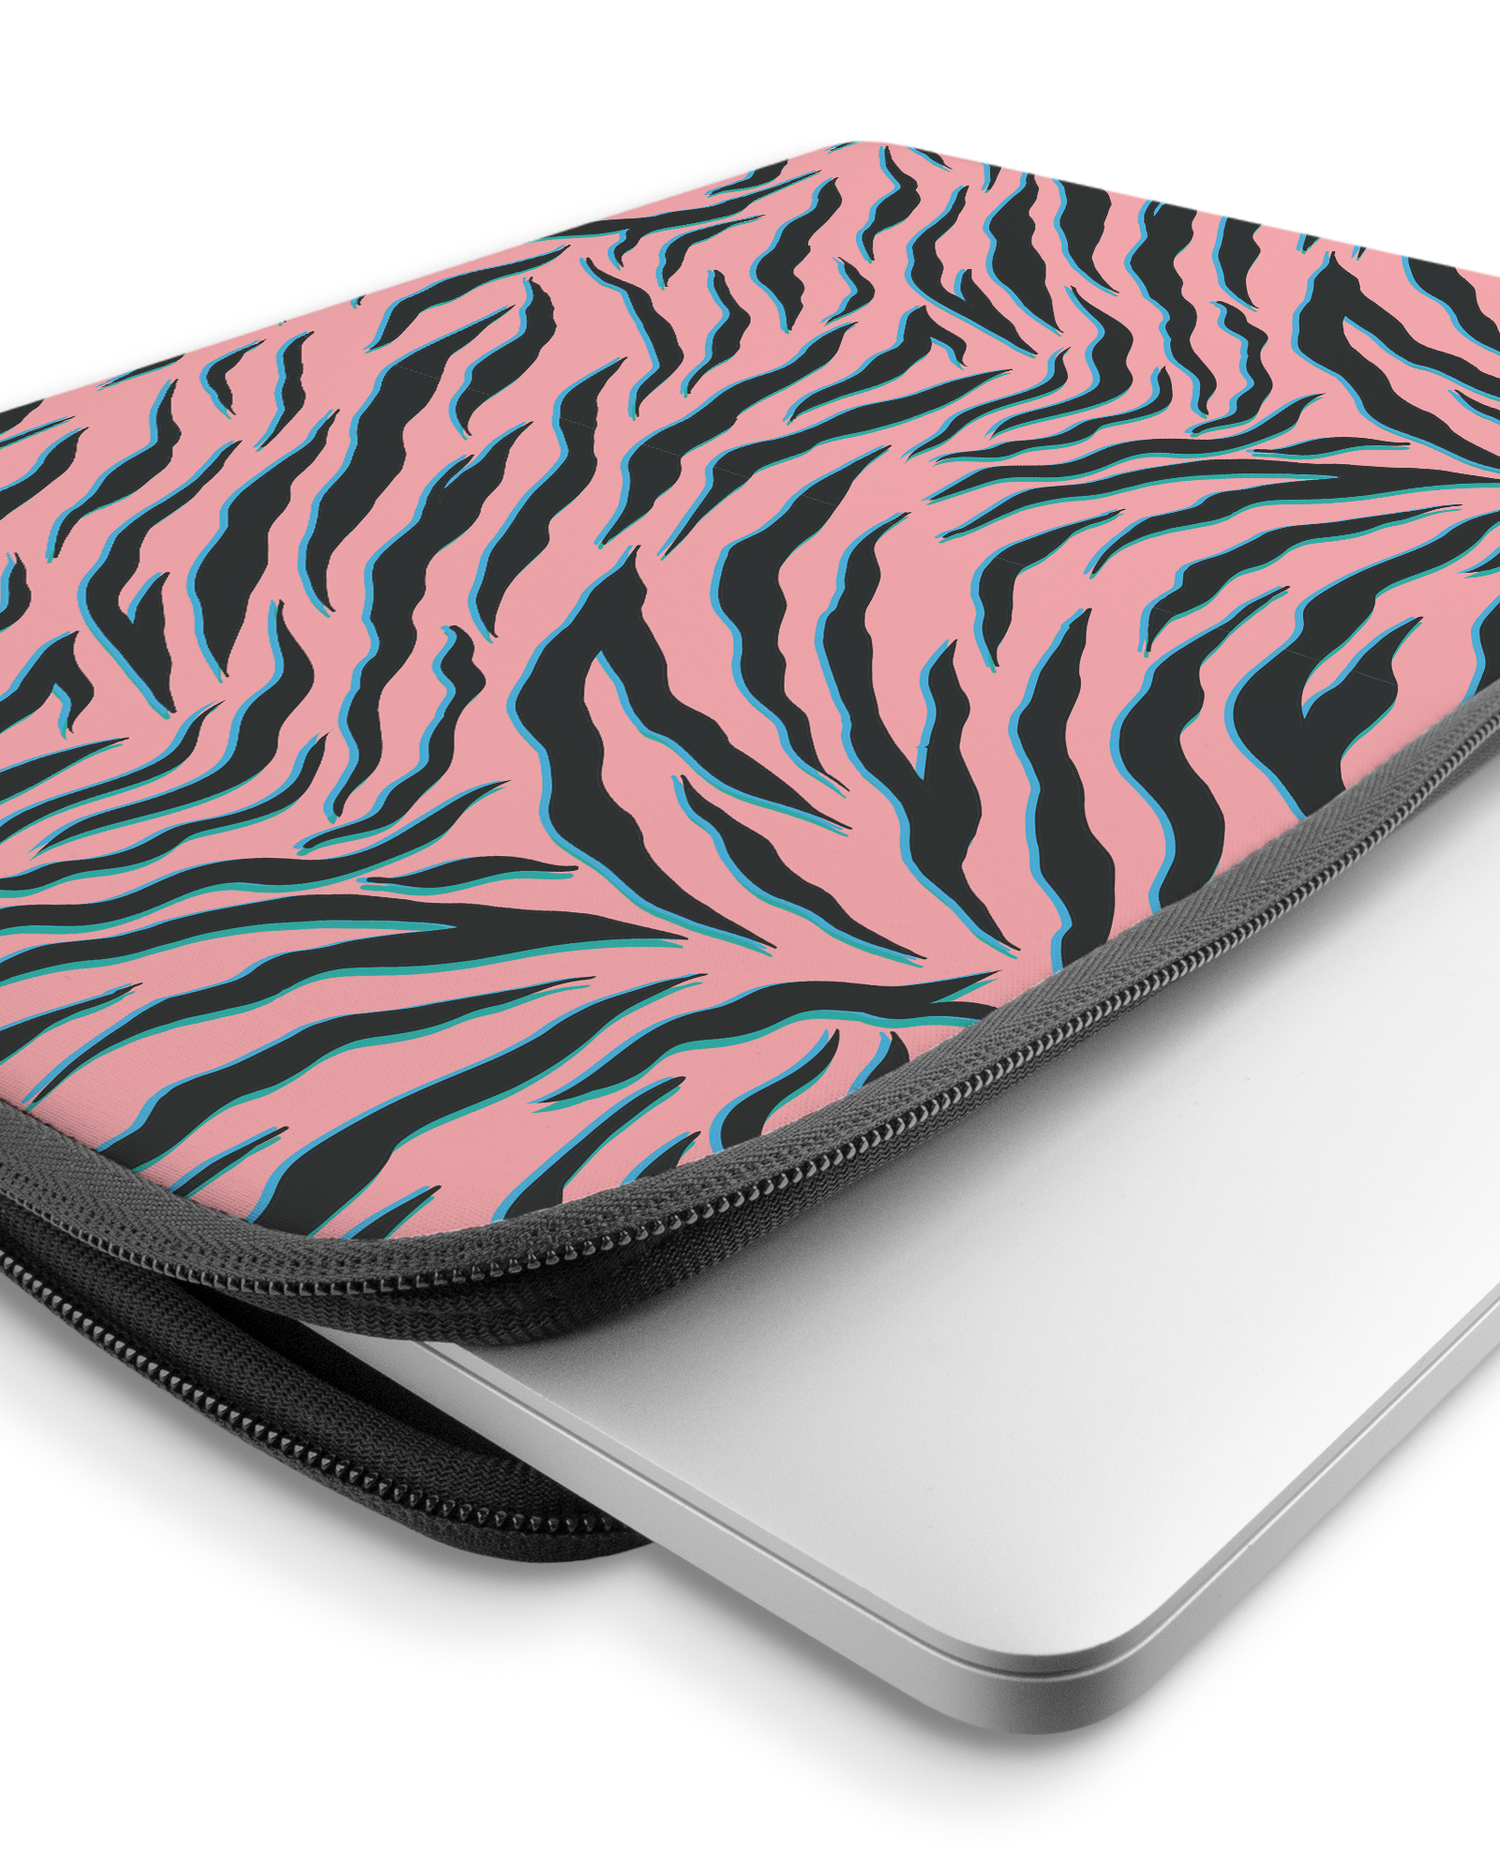 Pink Zebra Laptophülle 15-16 Zoll mit Gerät im Inneren